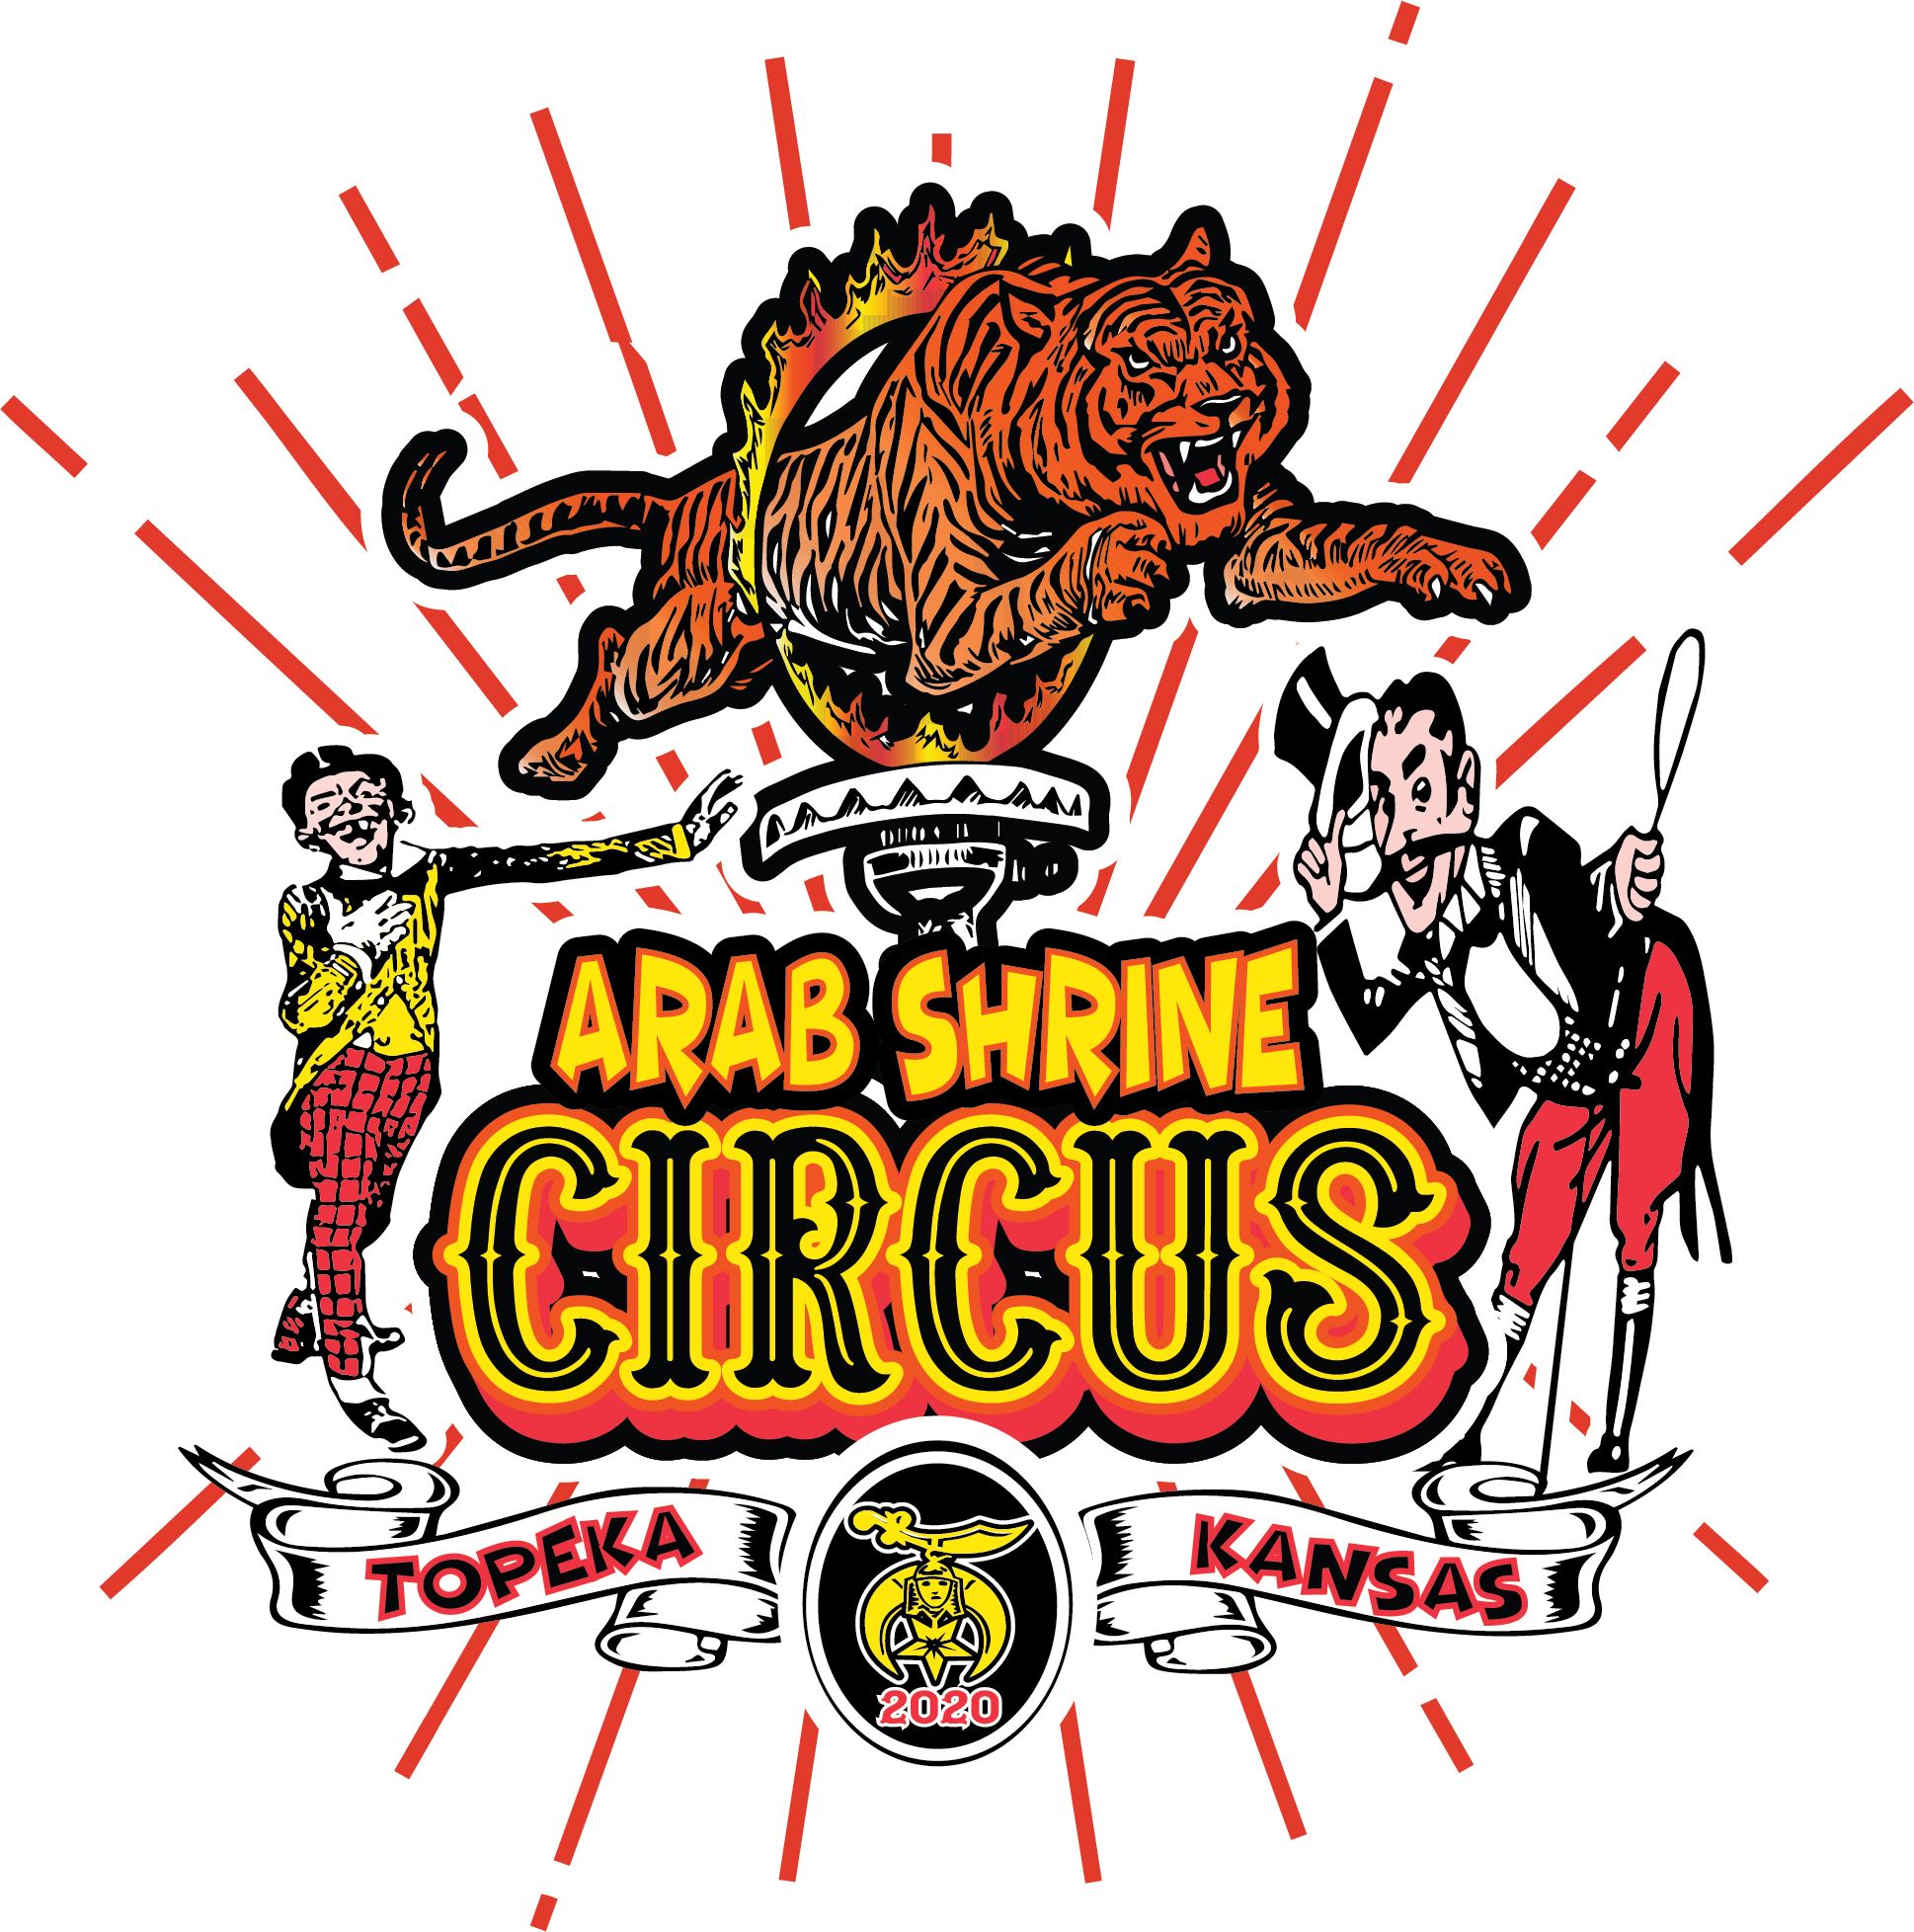 Arab Shrine Circus